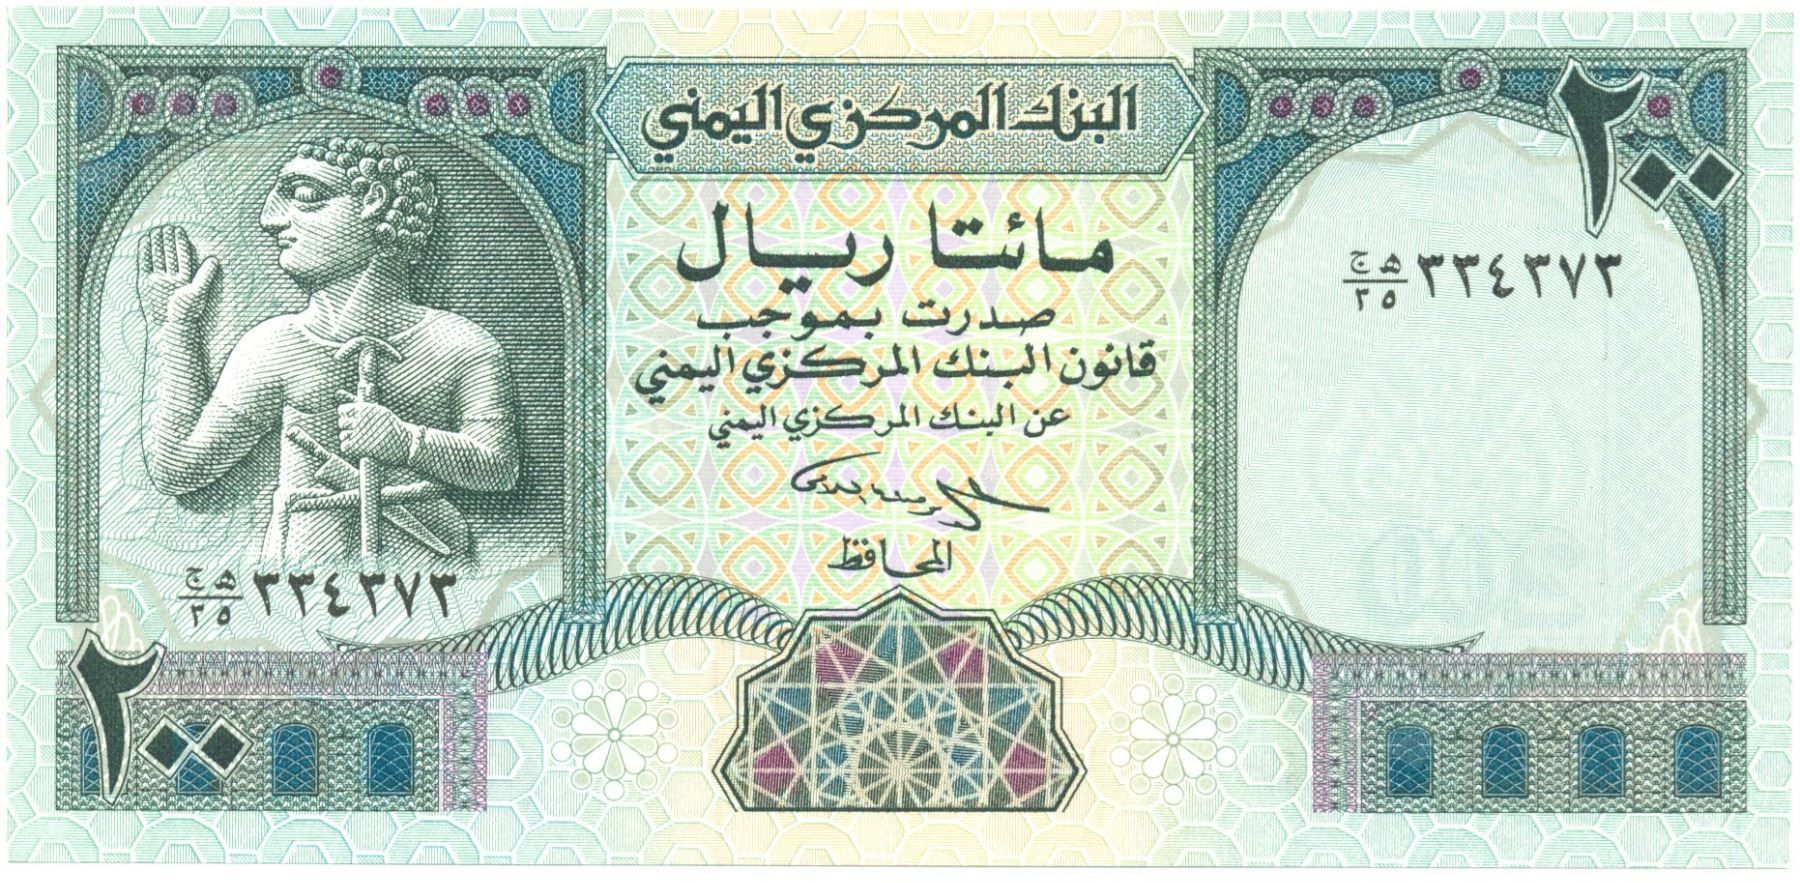 monnaie du yemen 4 lettres